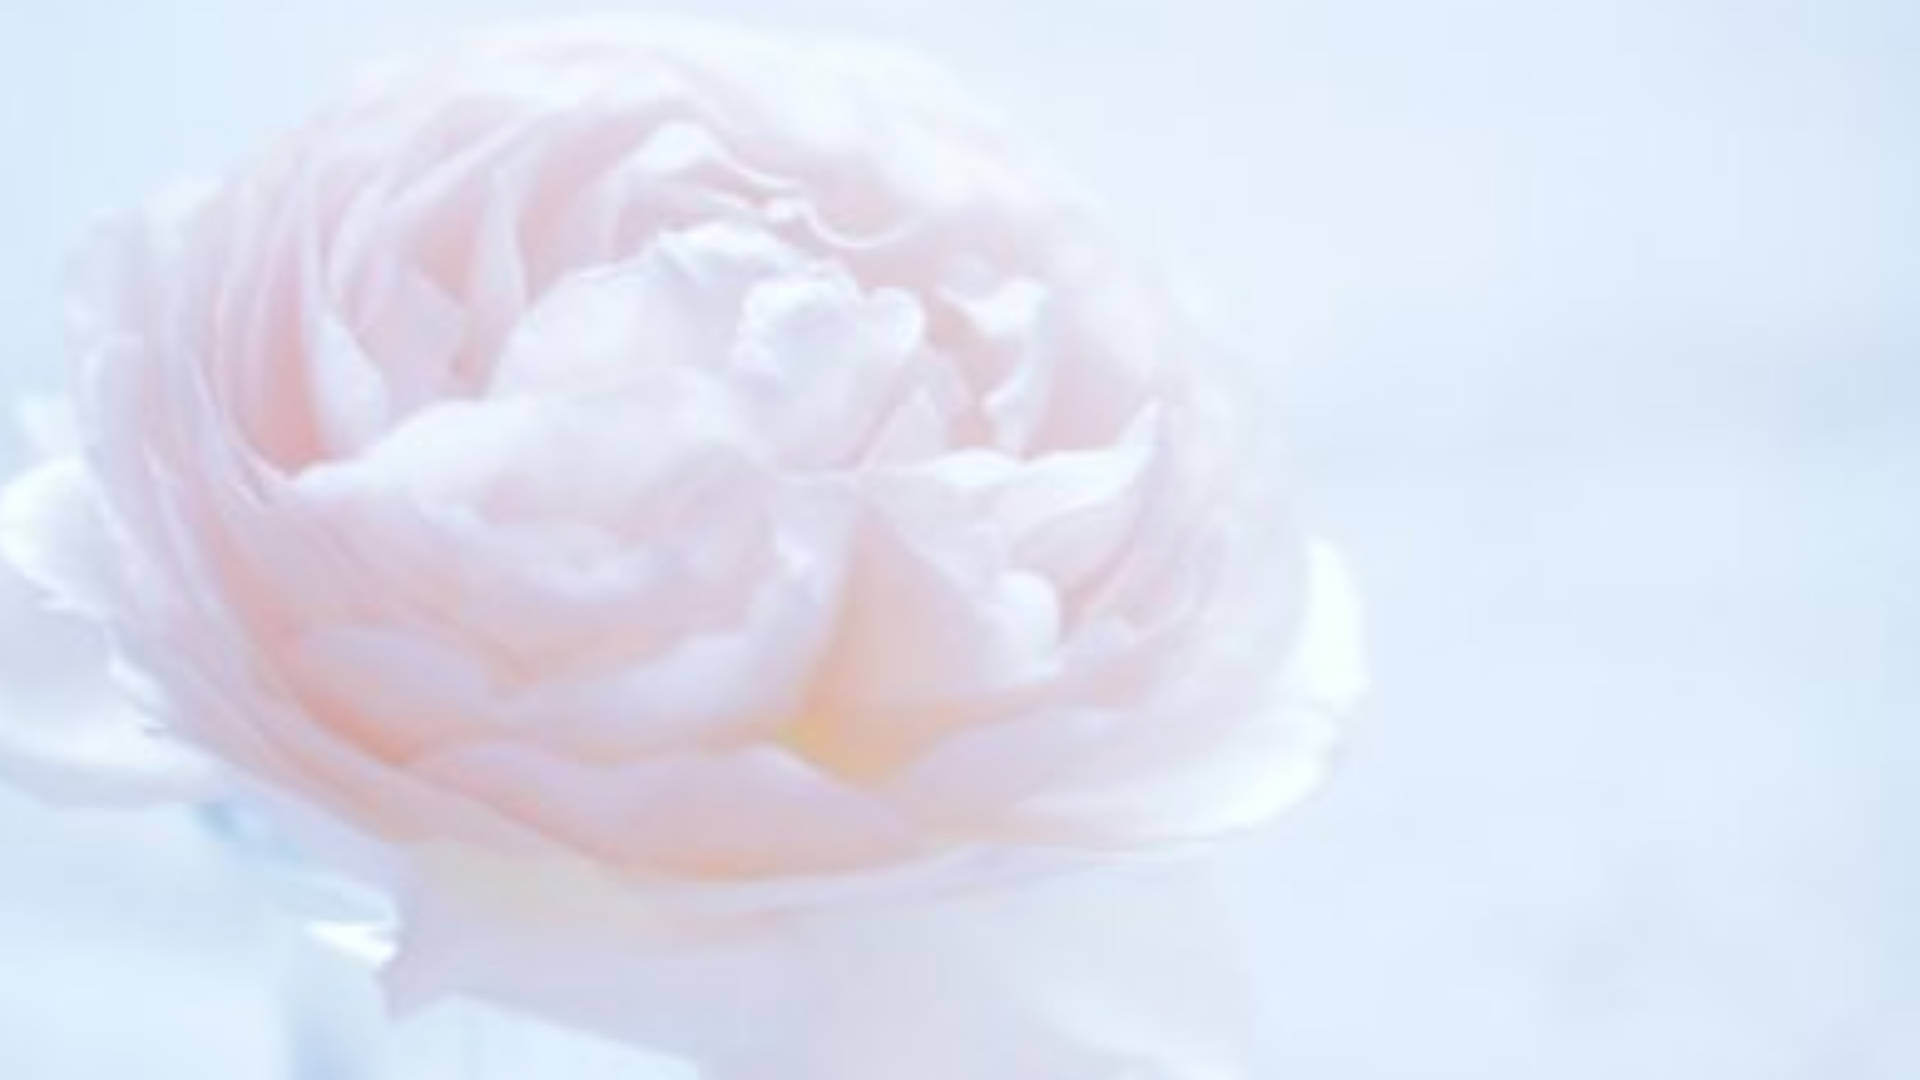 Blooming White Camellia Sasanqua Background